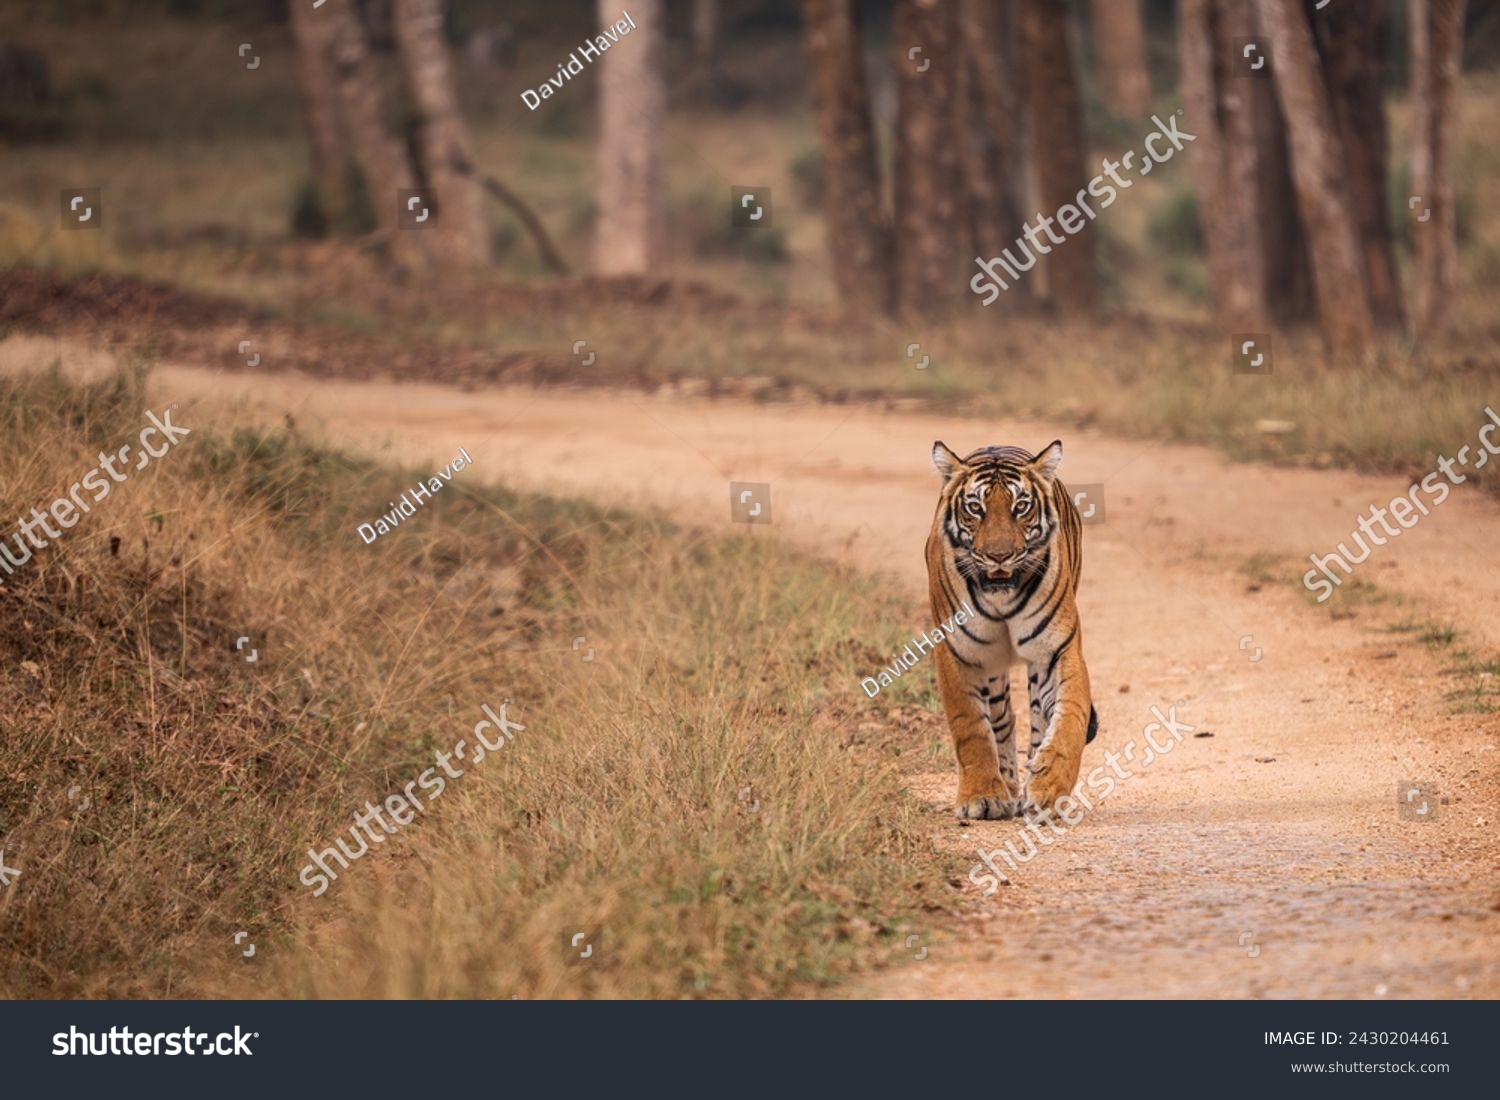 Bengal Tiger - Panthera Tigris tigris, beautiful colored large cat from South Asian forests and woodlands, Nagarahole Tiger Reserve, India. #2430204461